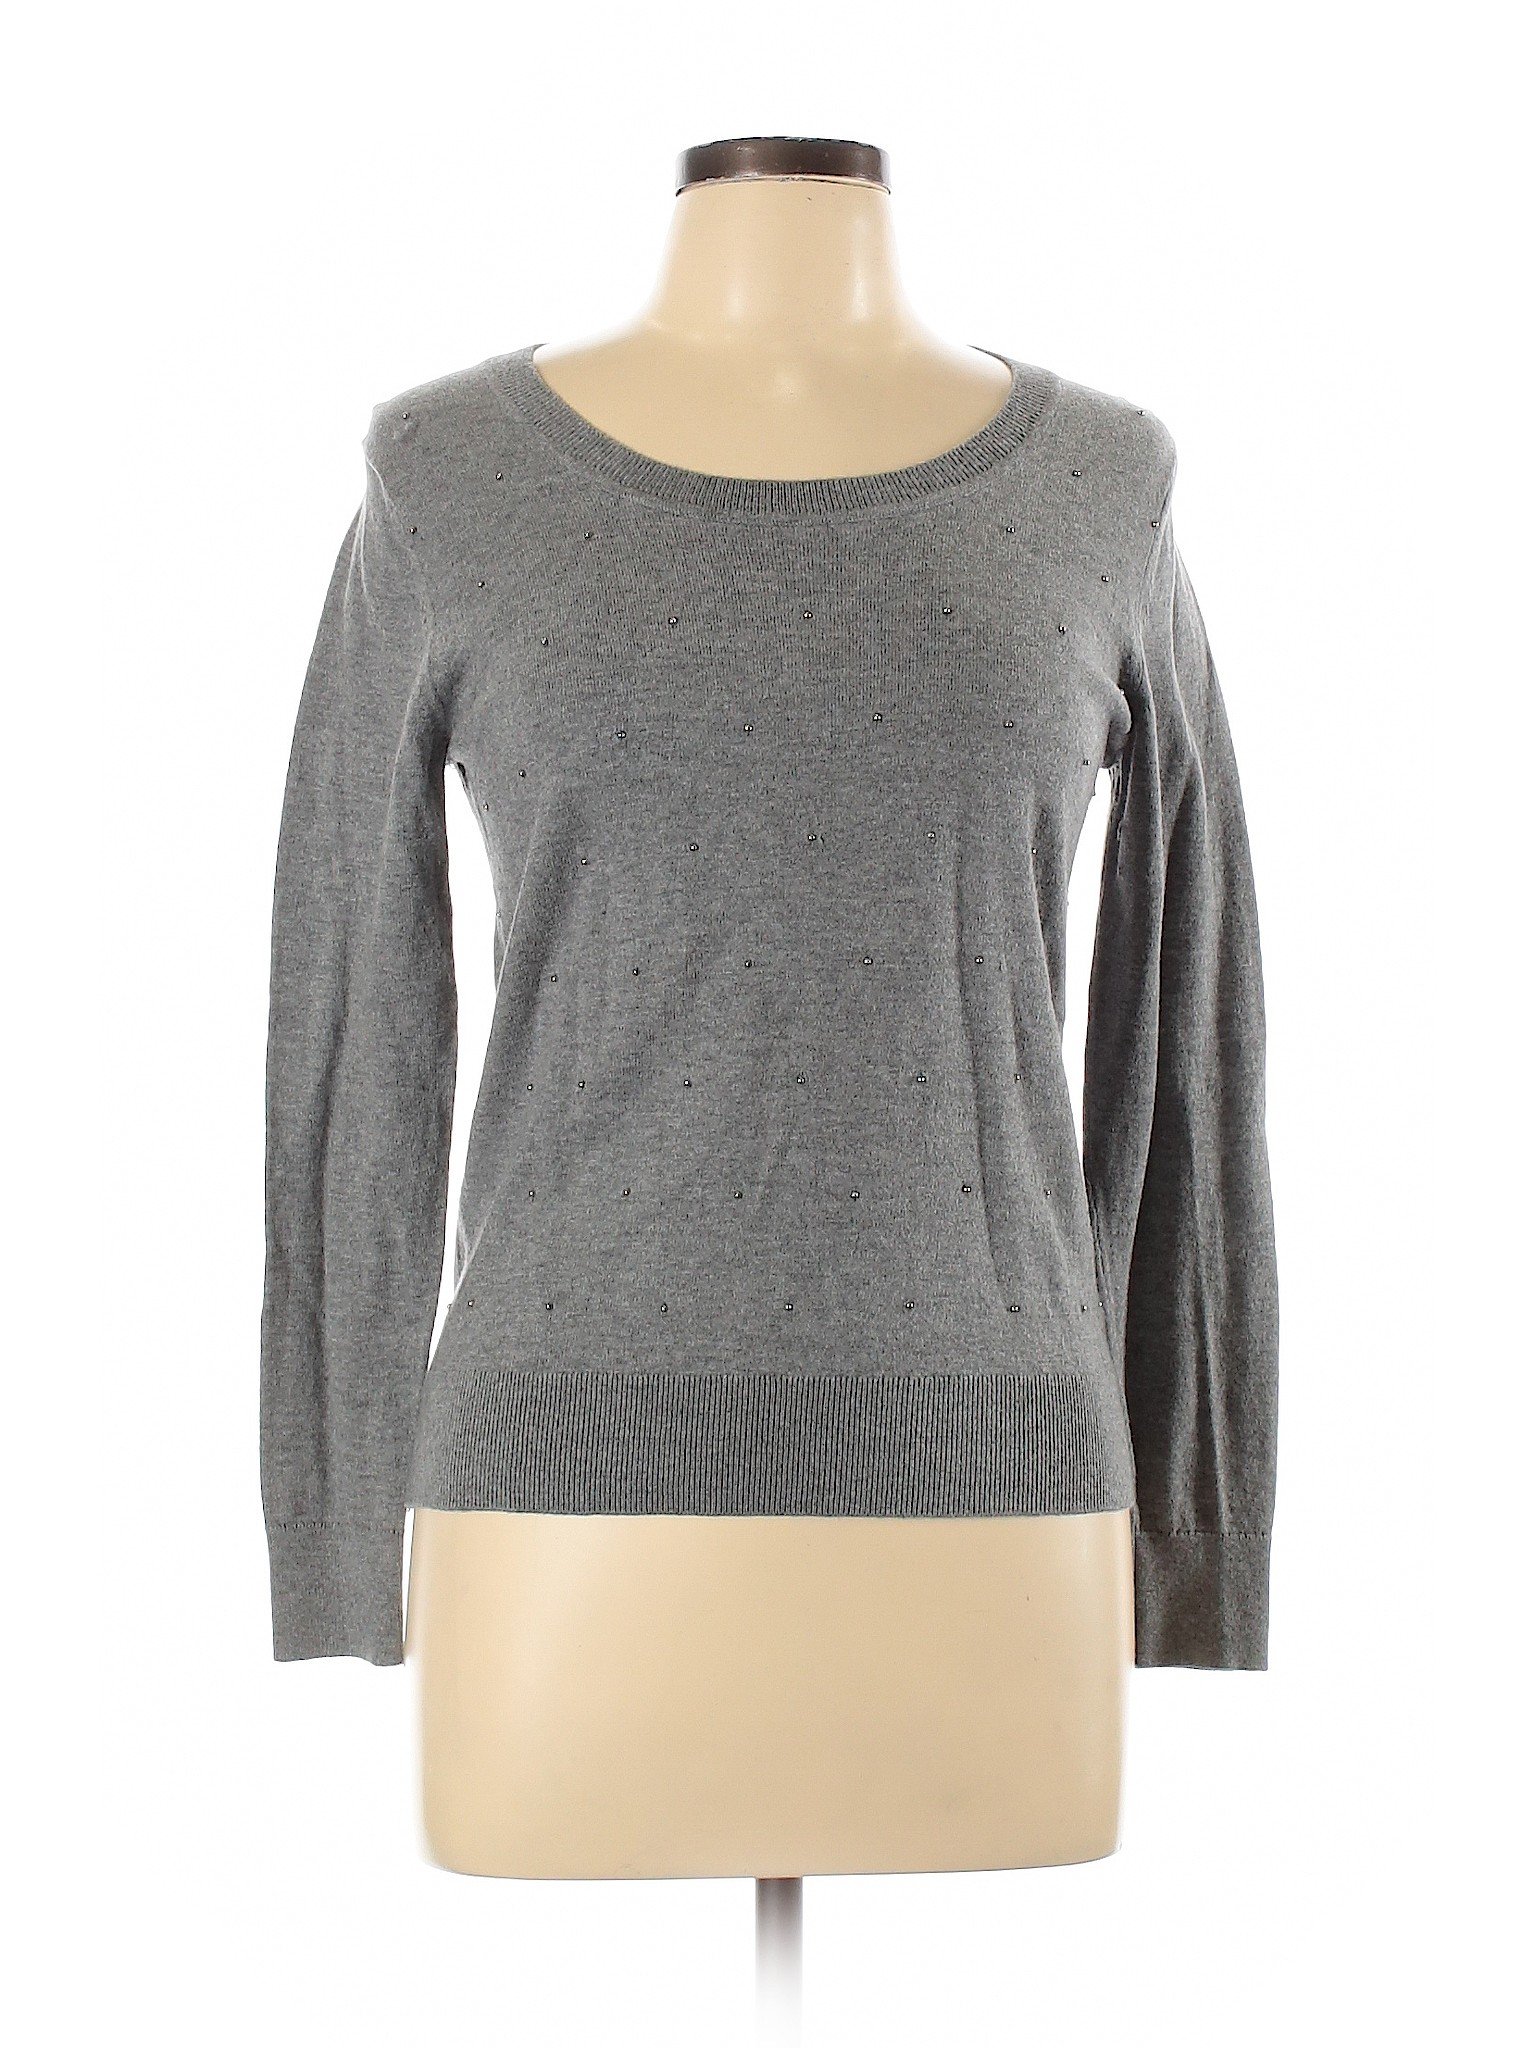 Banana Republic Factory Store Women Gray Pullover Sweater M | eBay